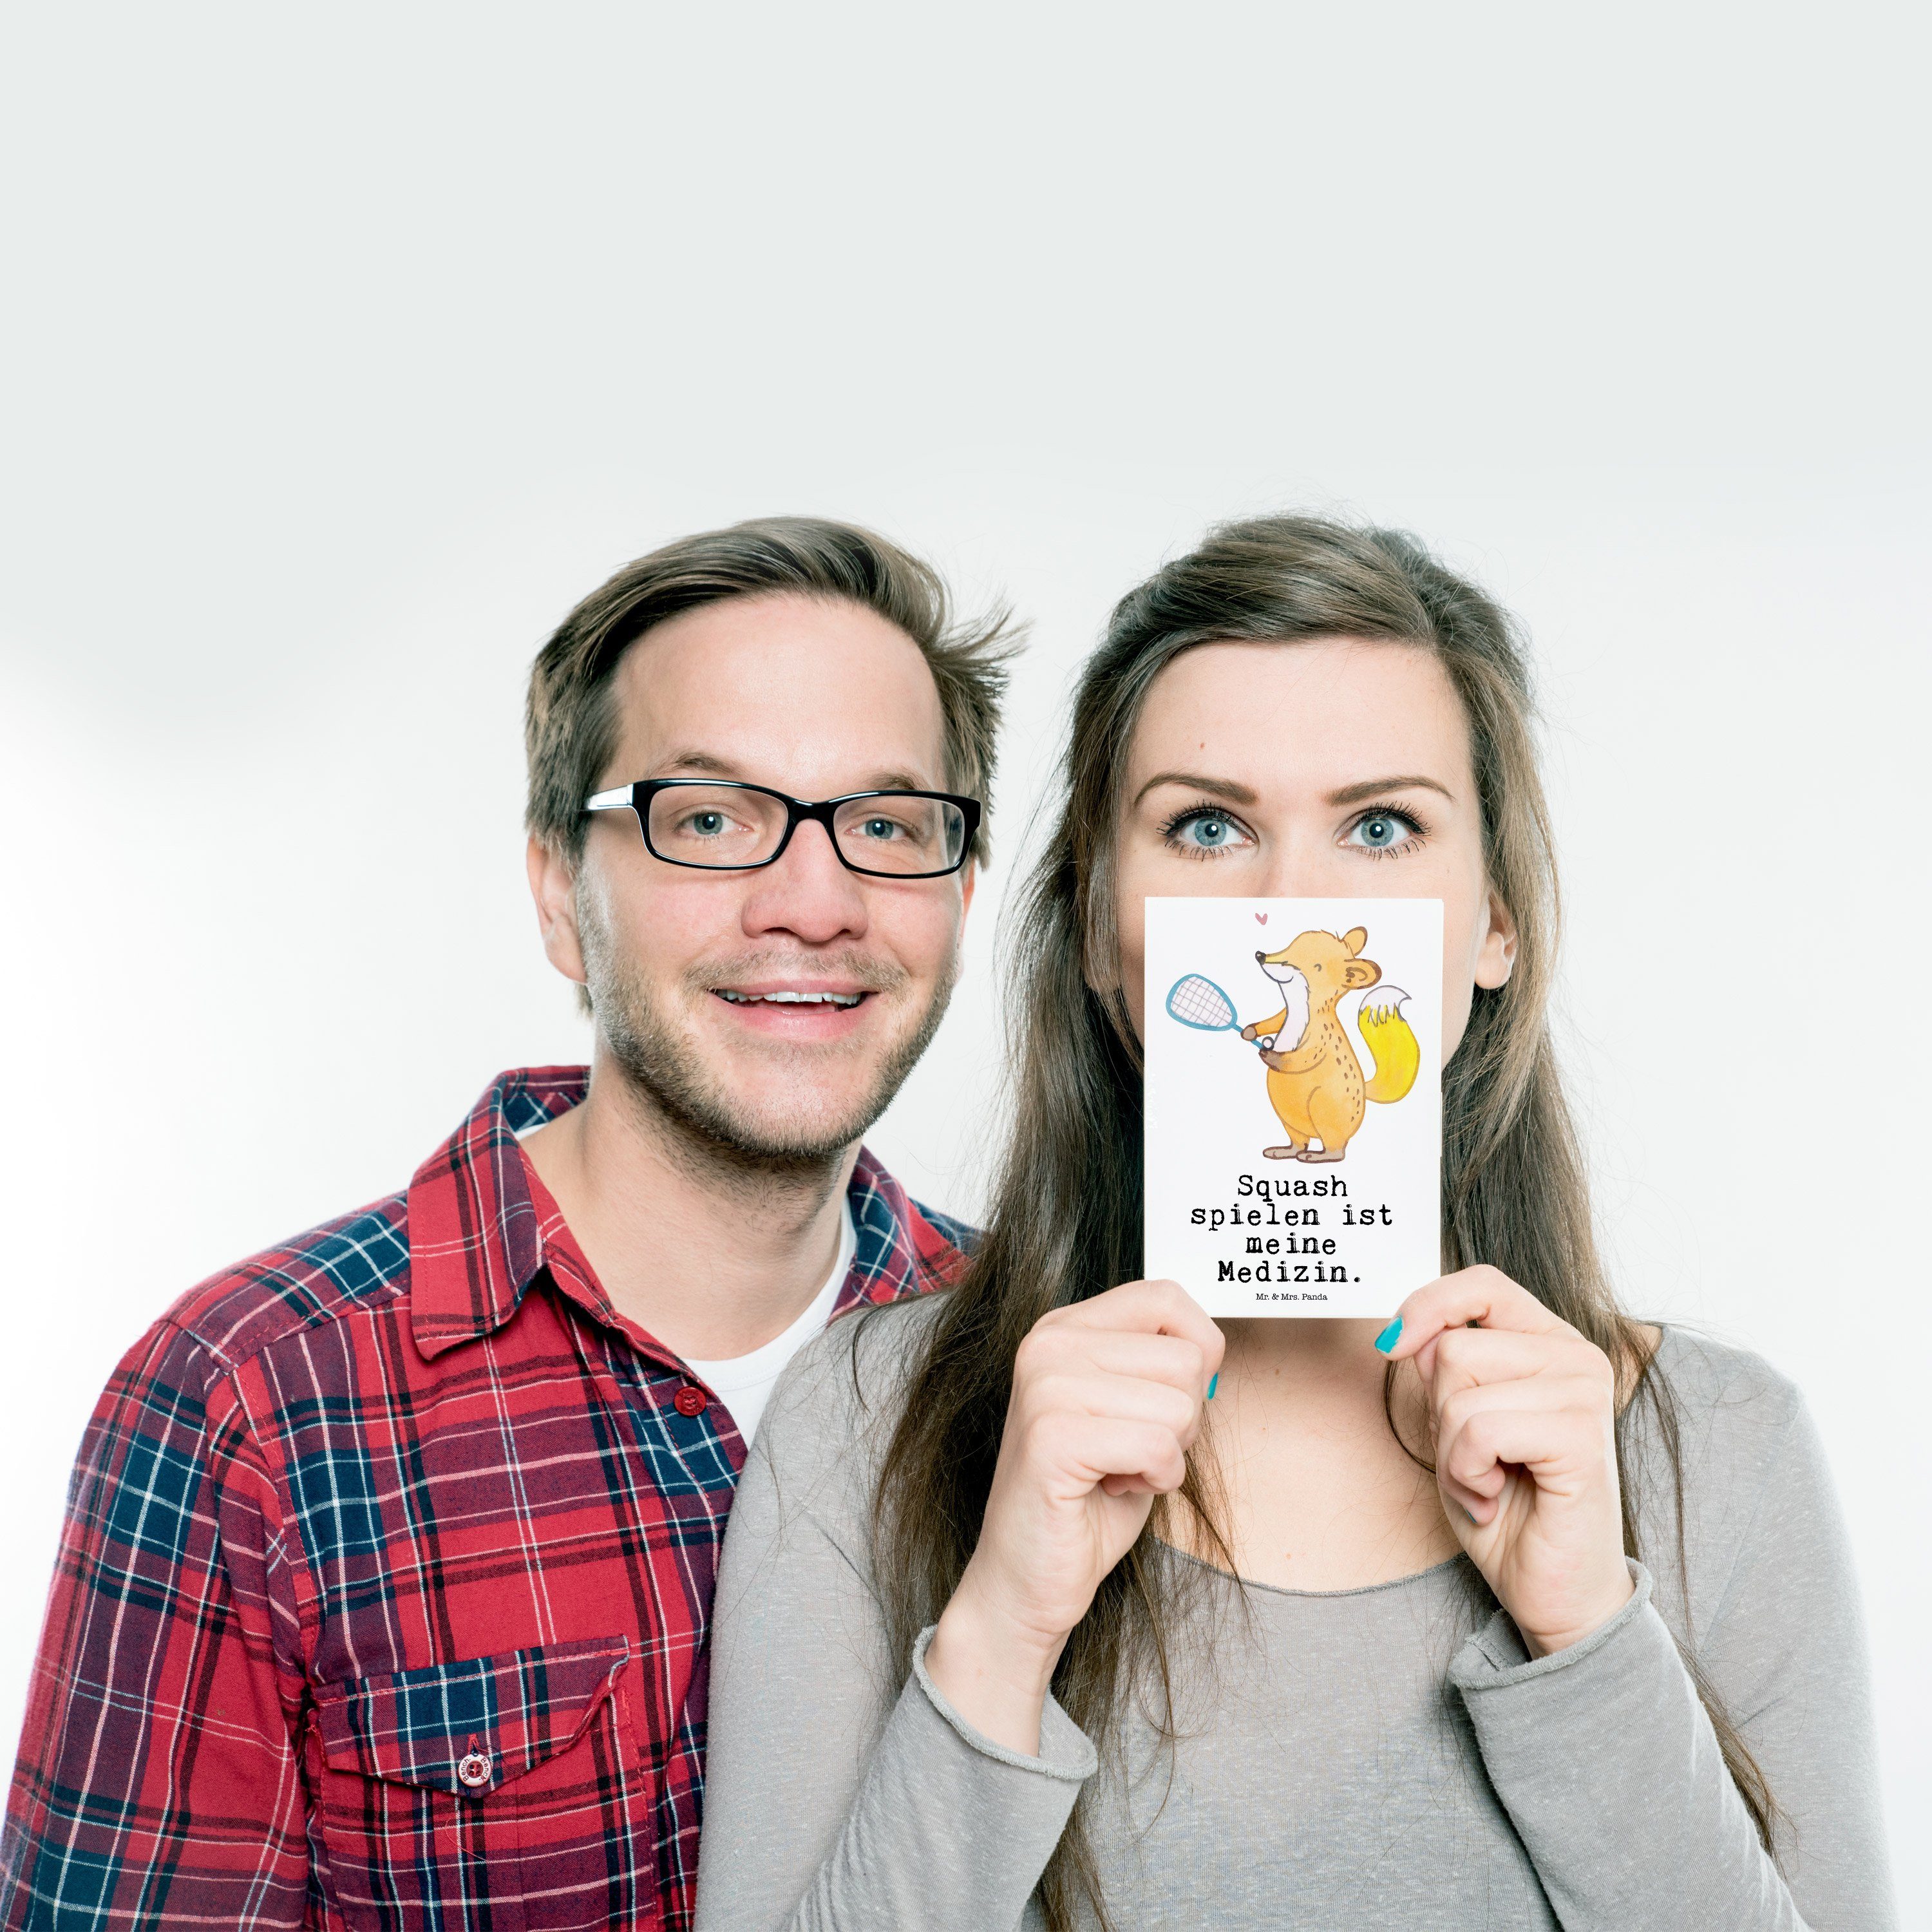 Geschenk, Mr. Panda Gewinn, - Squash Grußka Medizin Mrs. & Fuchs - Danke, Postkarte Weiß spielen